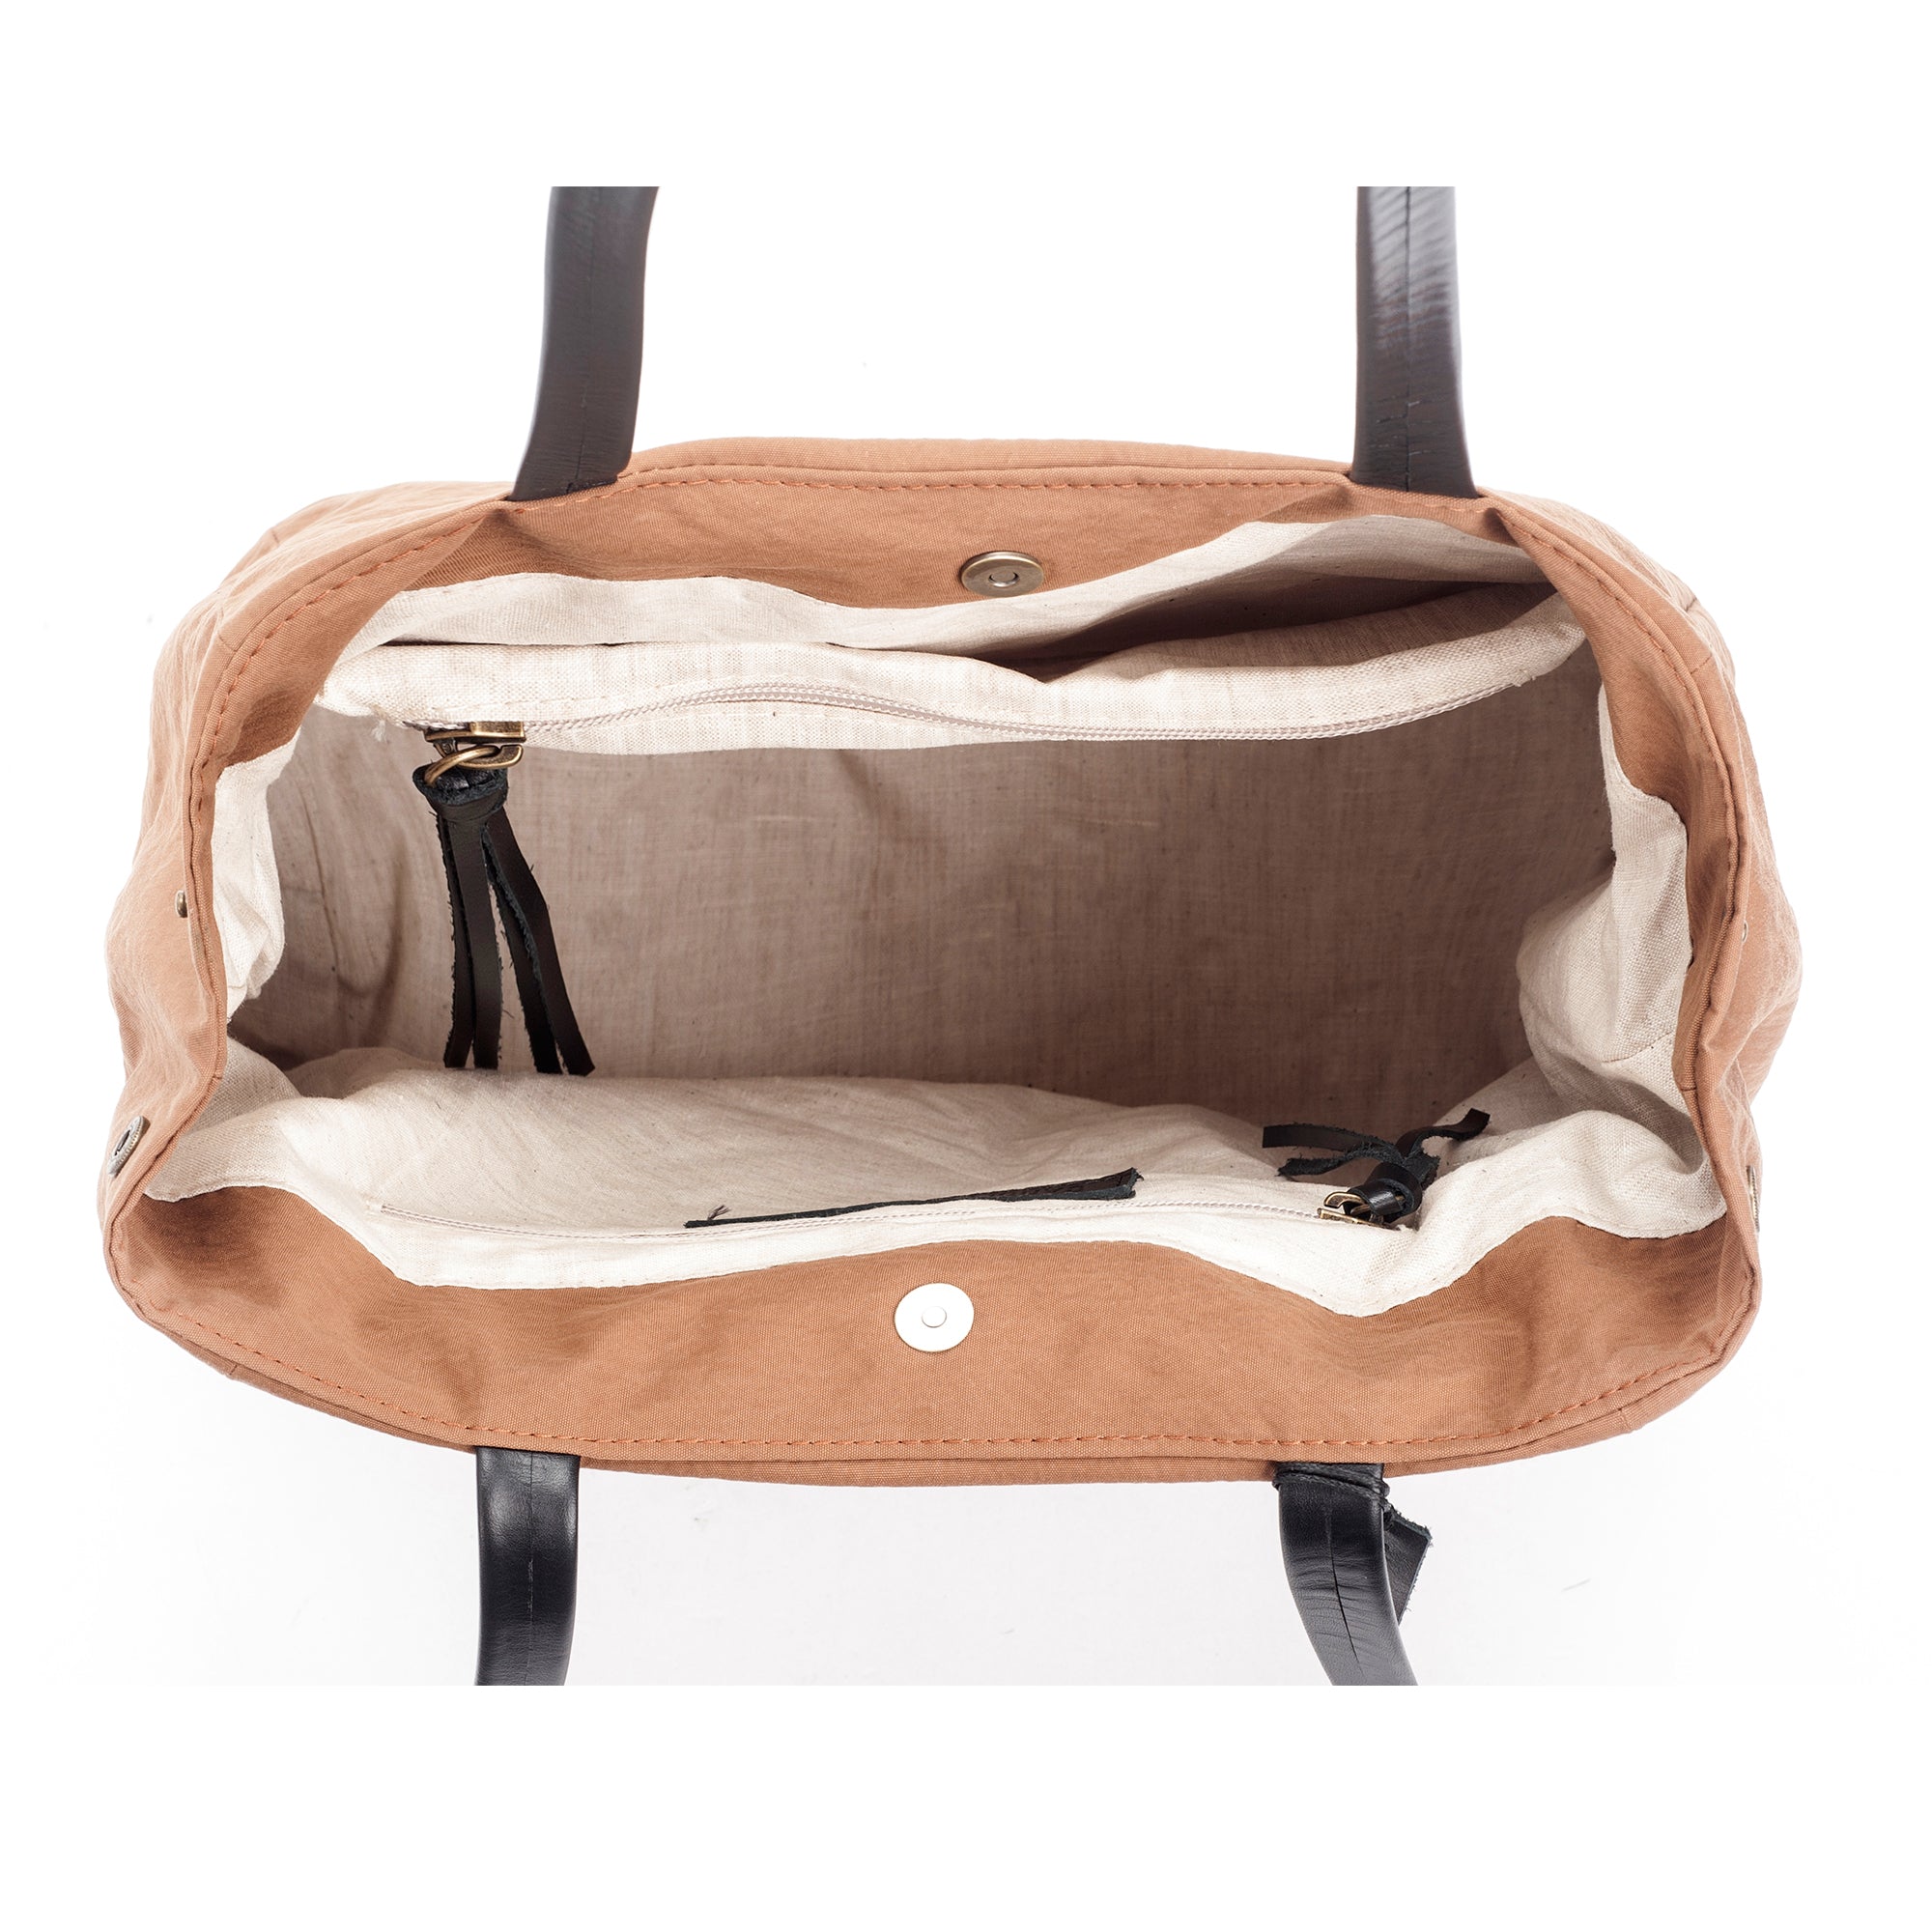 URBAN BAG Impex Fabric Stylish & Trendy Handbag for Women & Girls| Color: brown